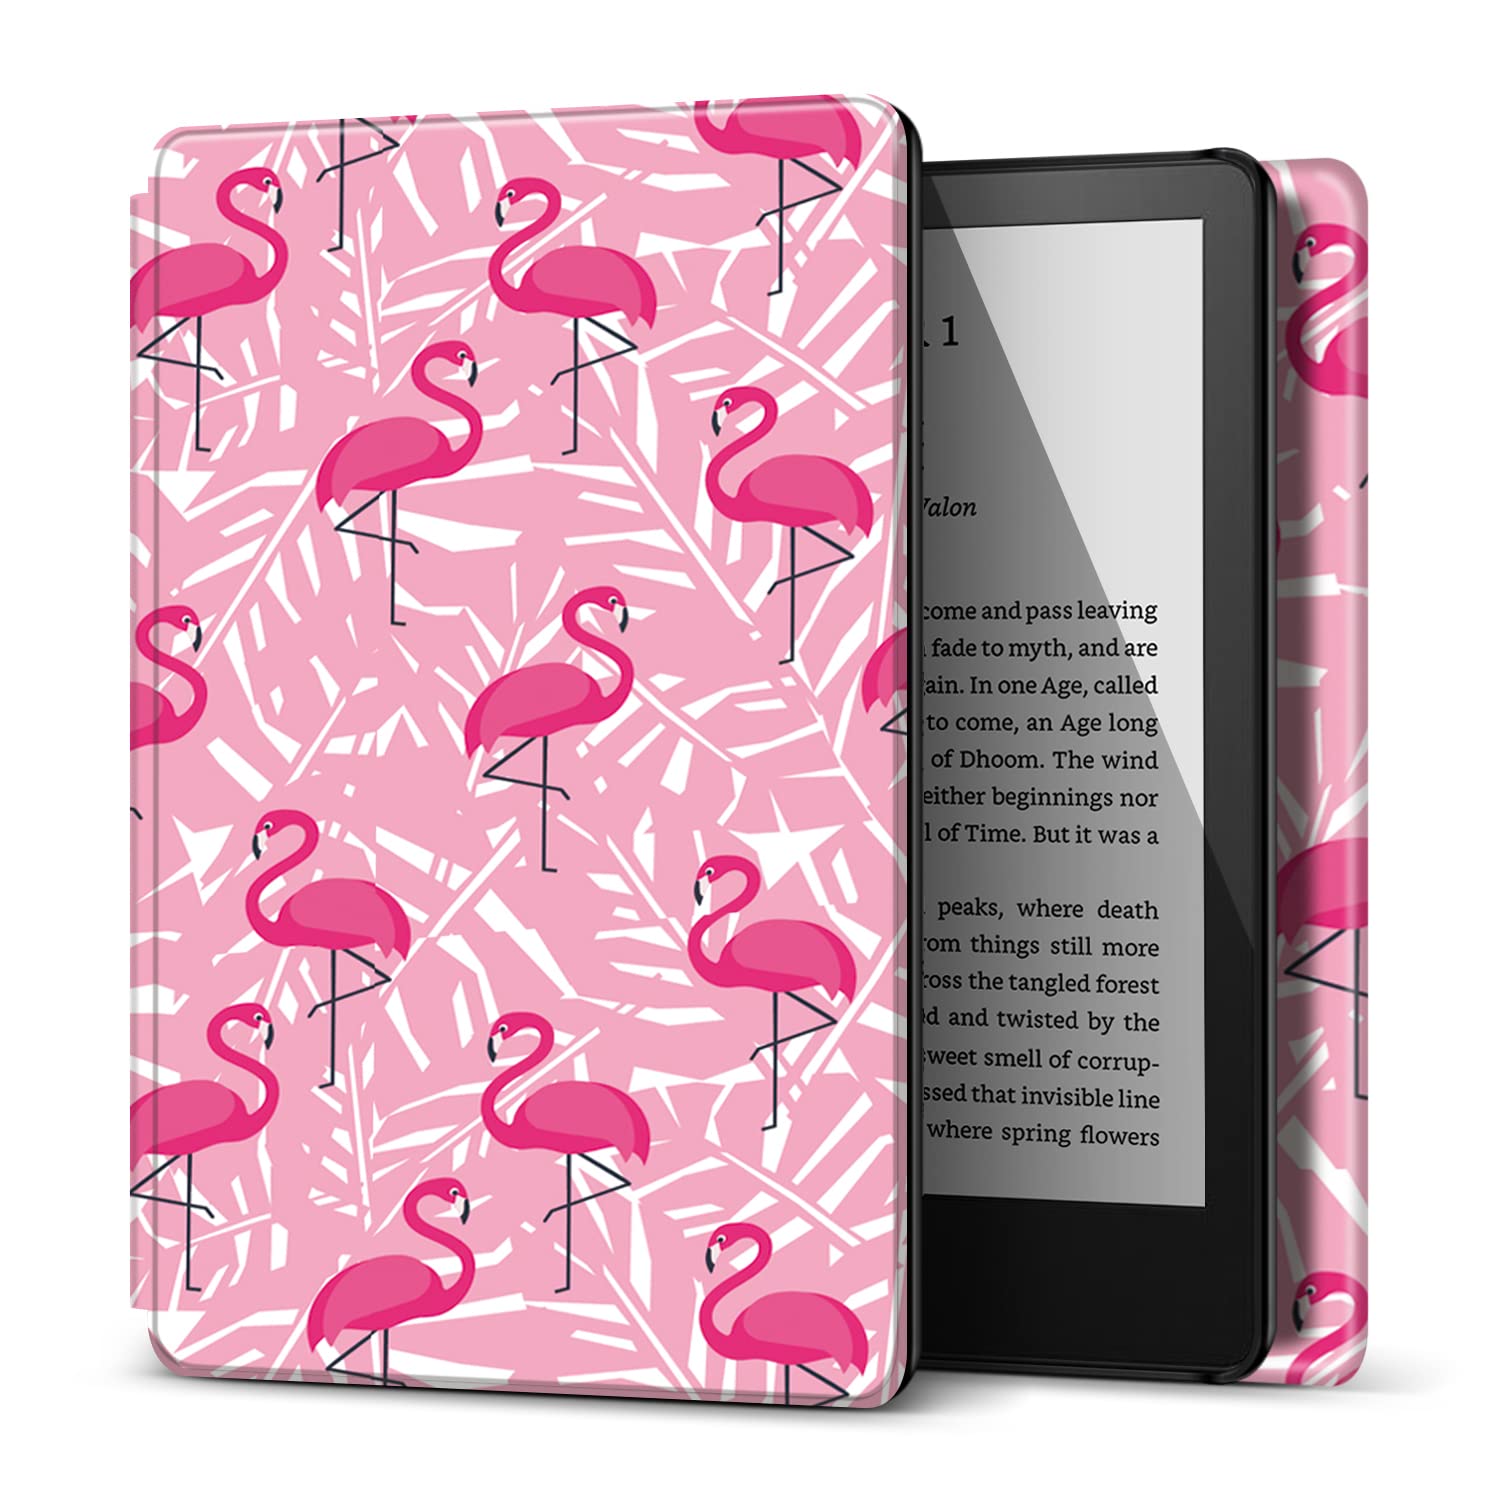 TNP Hülle für Kindle 11. Generation – Schlank & Leicht Schutzhülle für 6 Zoll Amazon Kindle 2022 Case, Ultradünnes E-Book Reader Cover, Automatische Ruhe-/Wachfunktion - Flamingo - Rosa